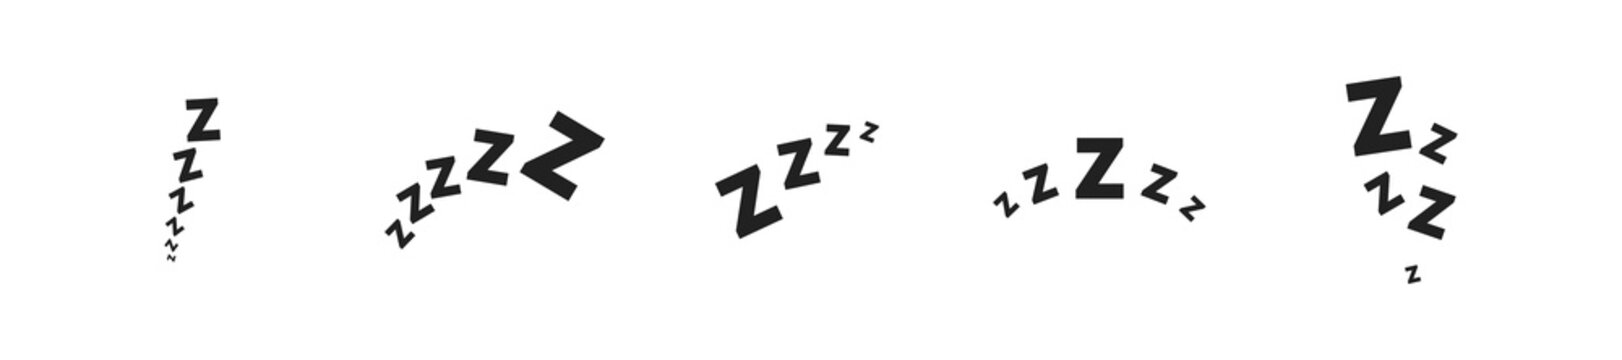 Sleepy zzz icon set. Vector EPS 10